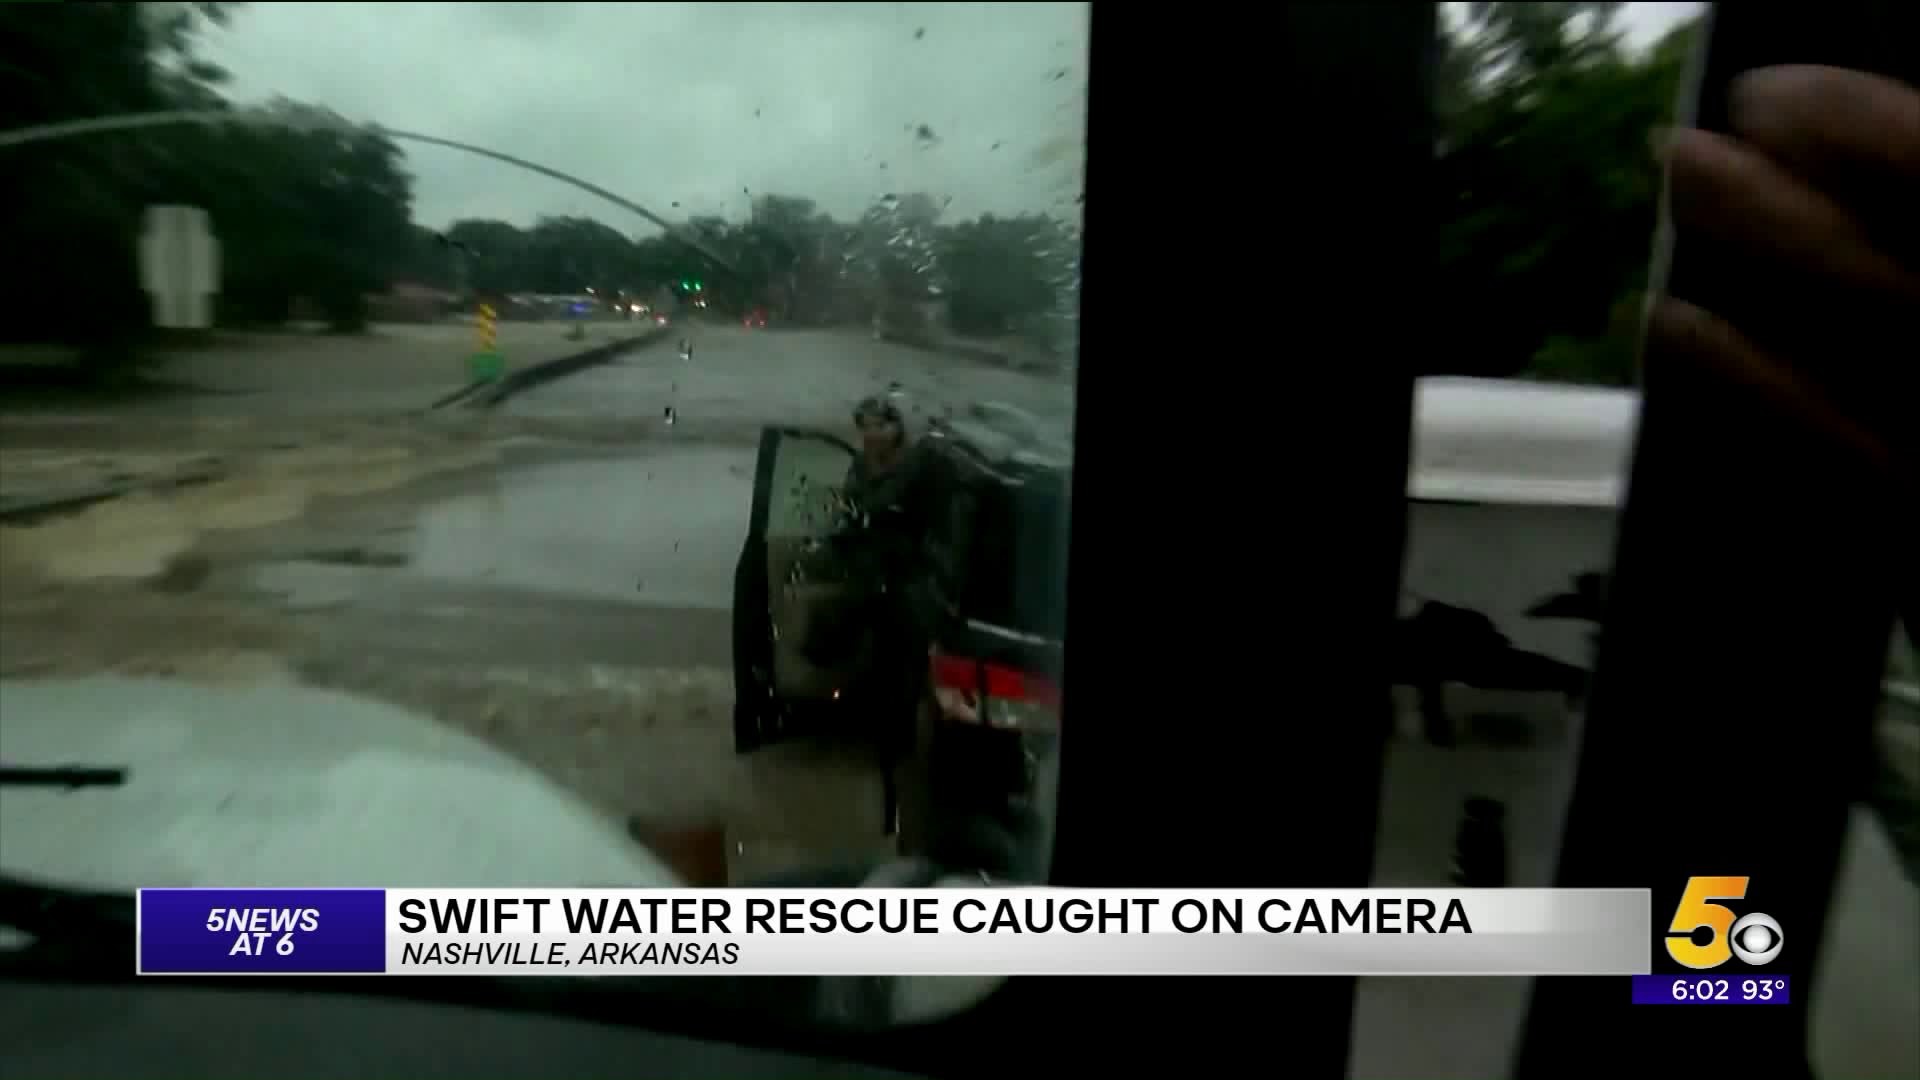 Swift Water Rescue in Nashville, Ark.